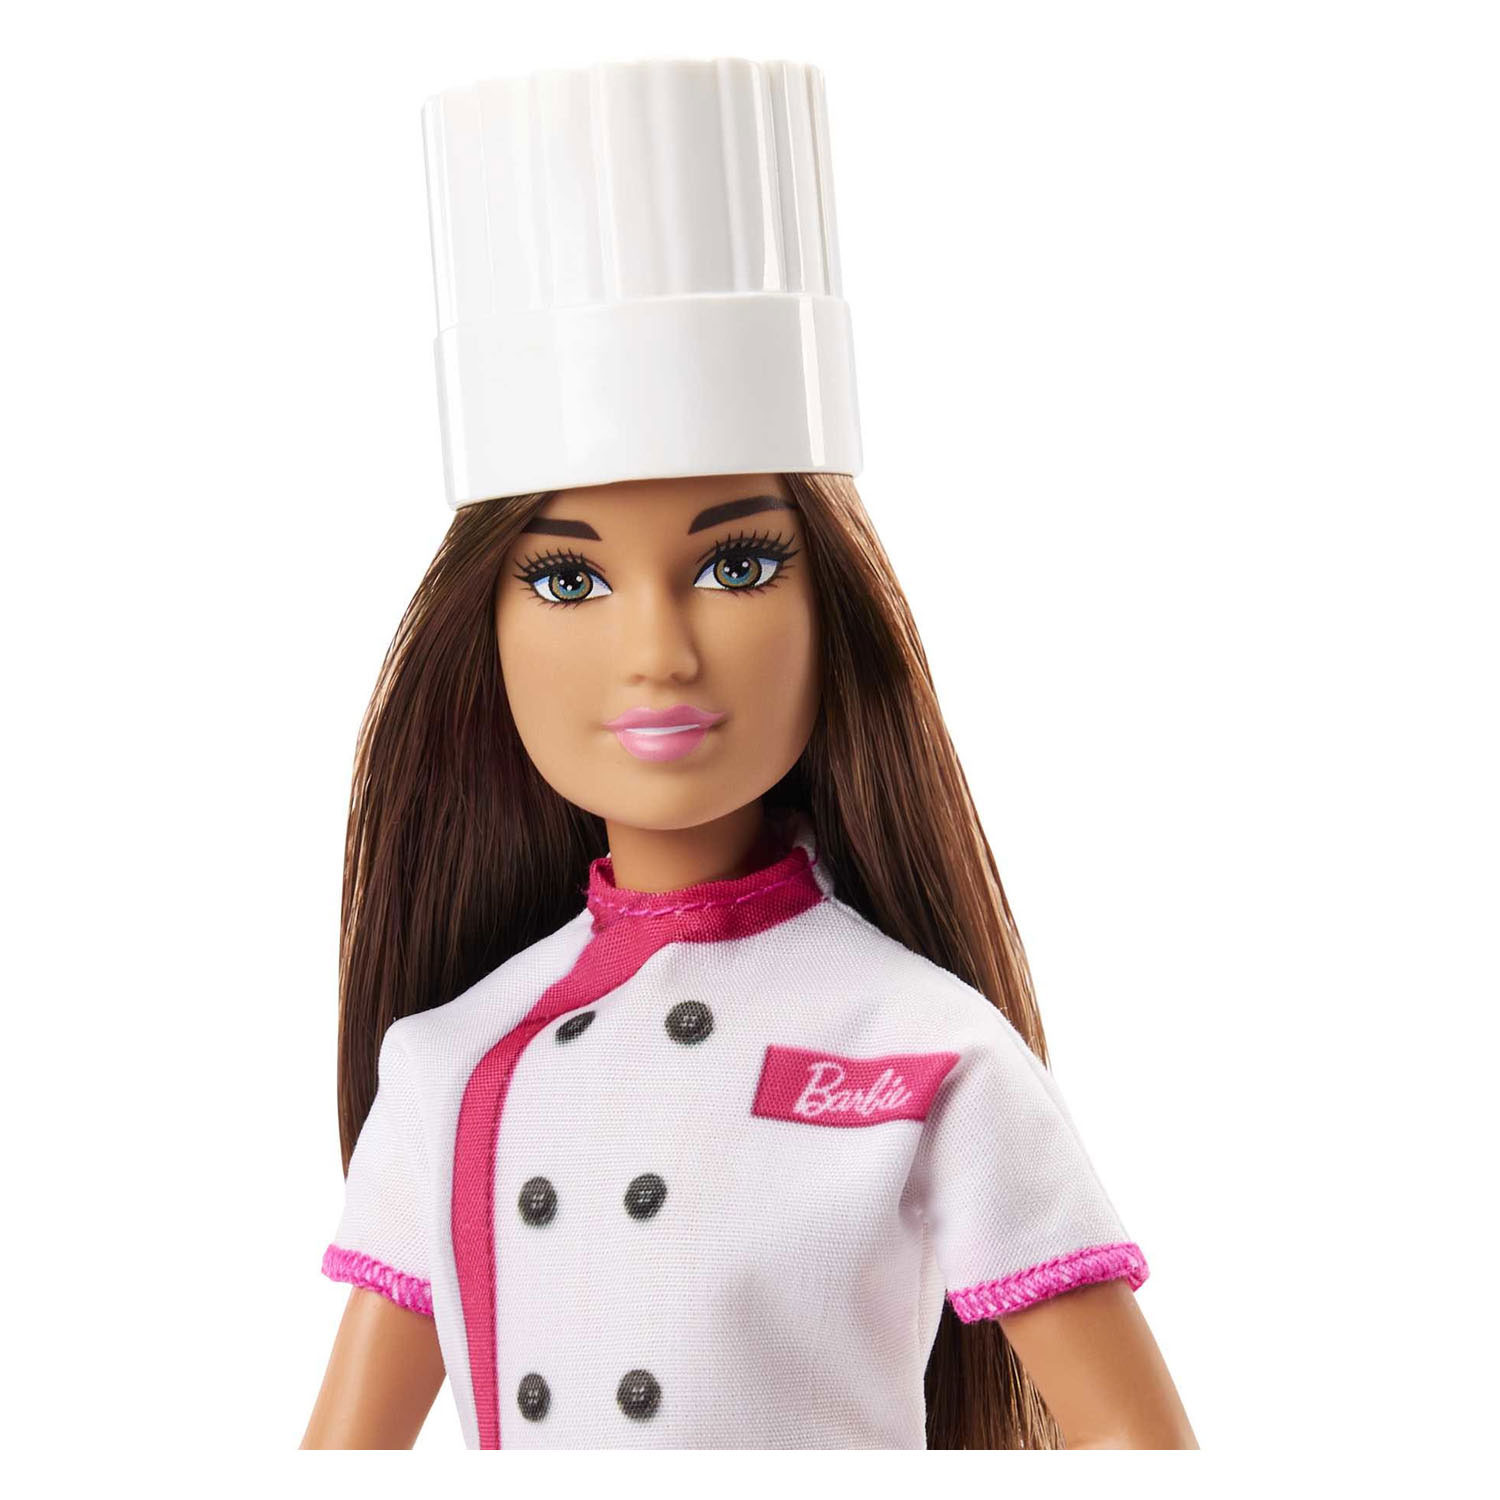 Barbie Chef Pattiserie Puppe